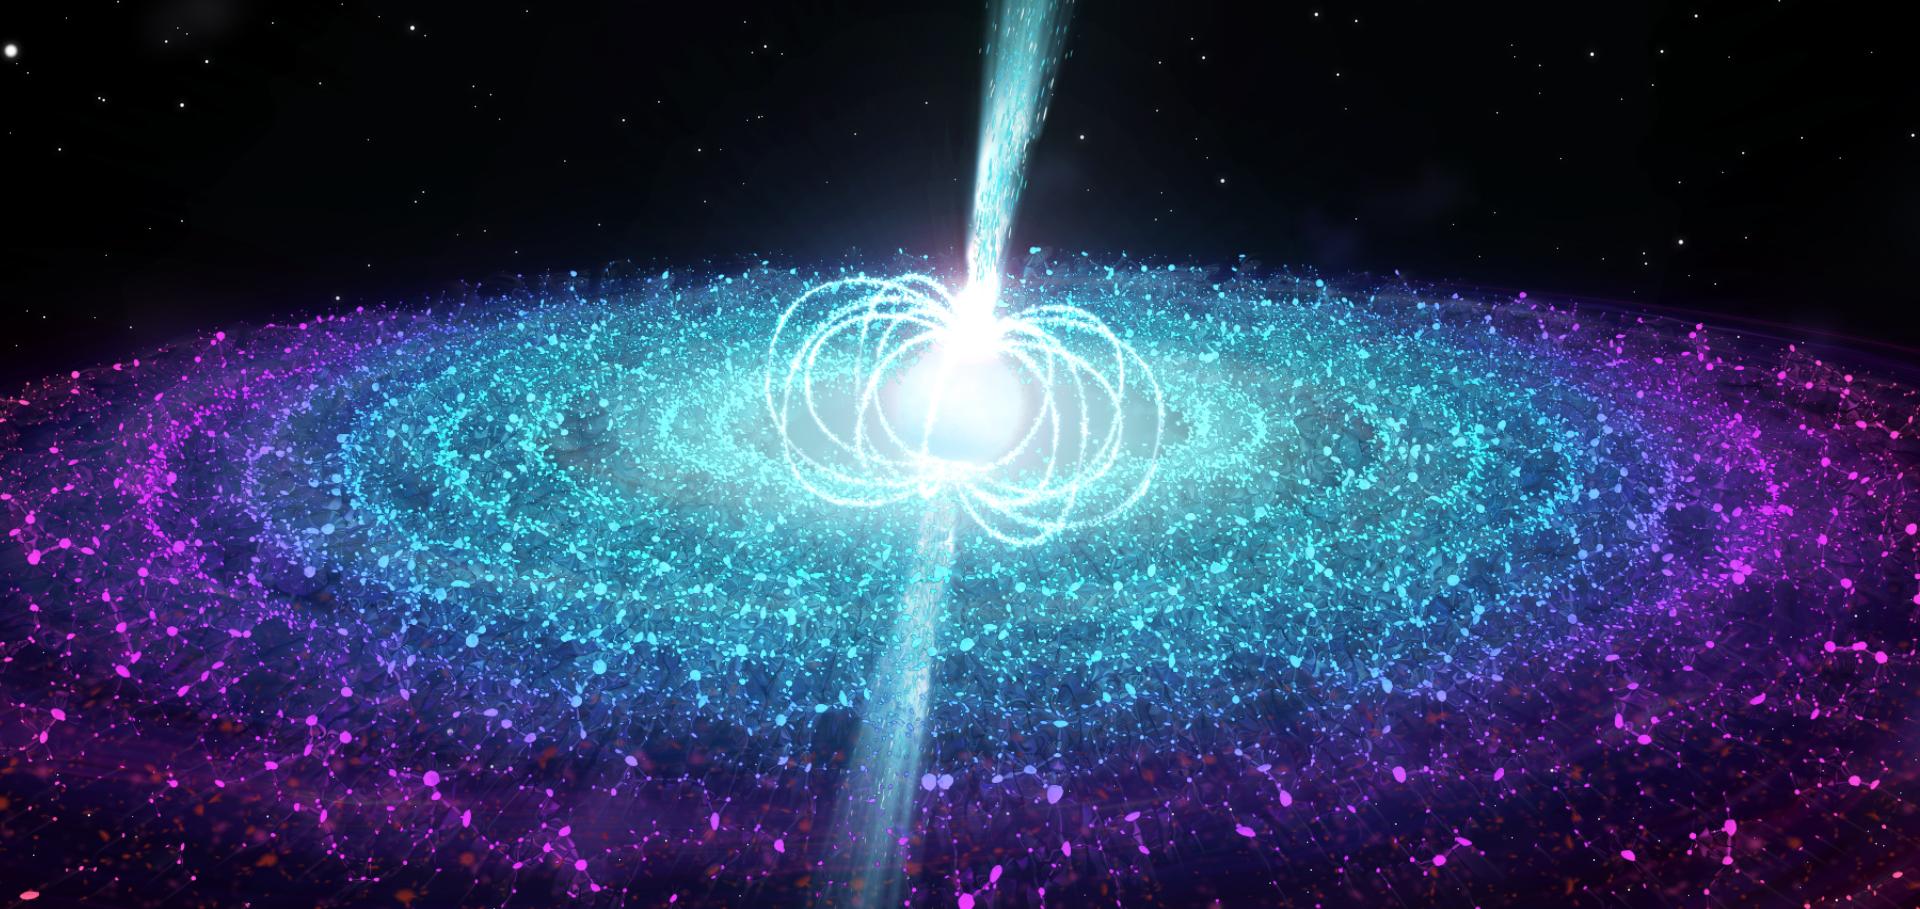 Artist's impression of an accreting neutron star